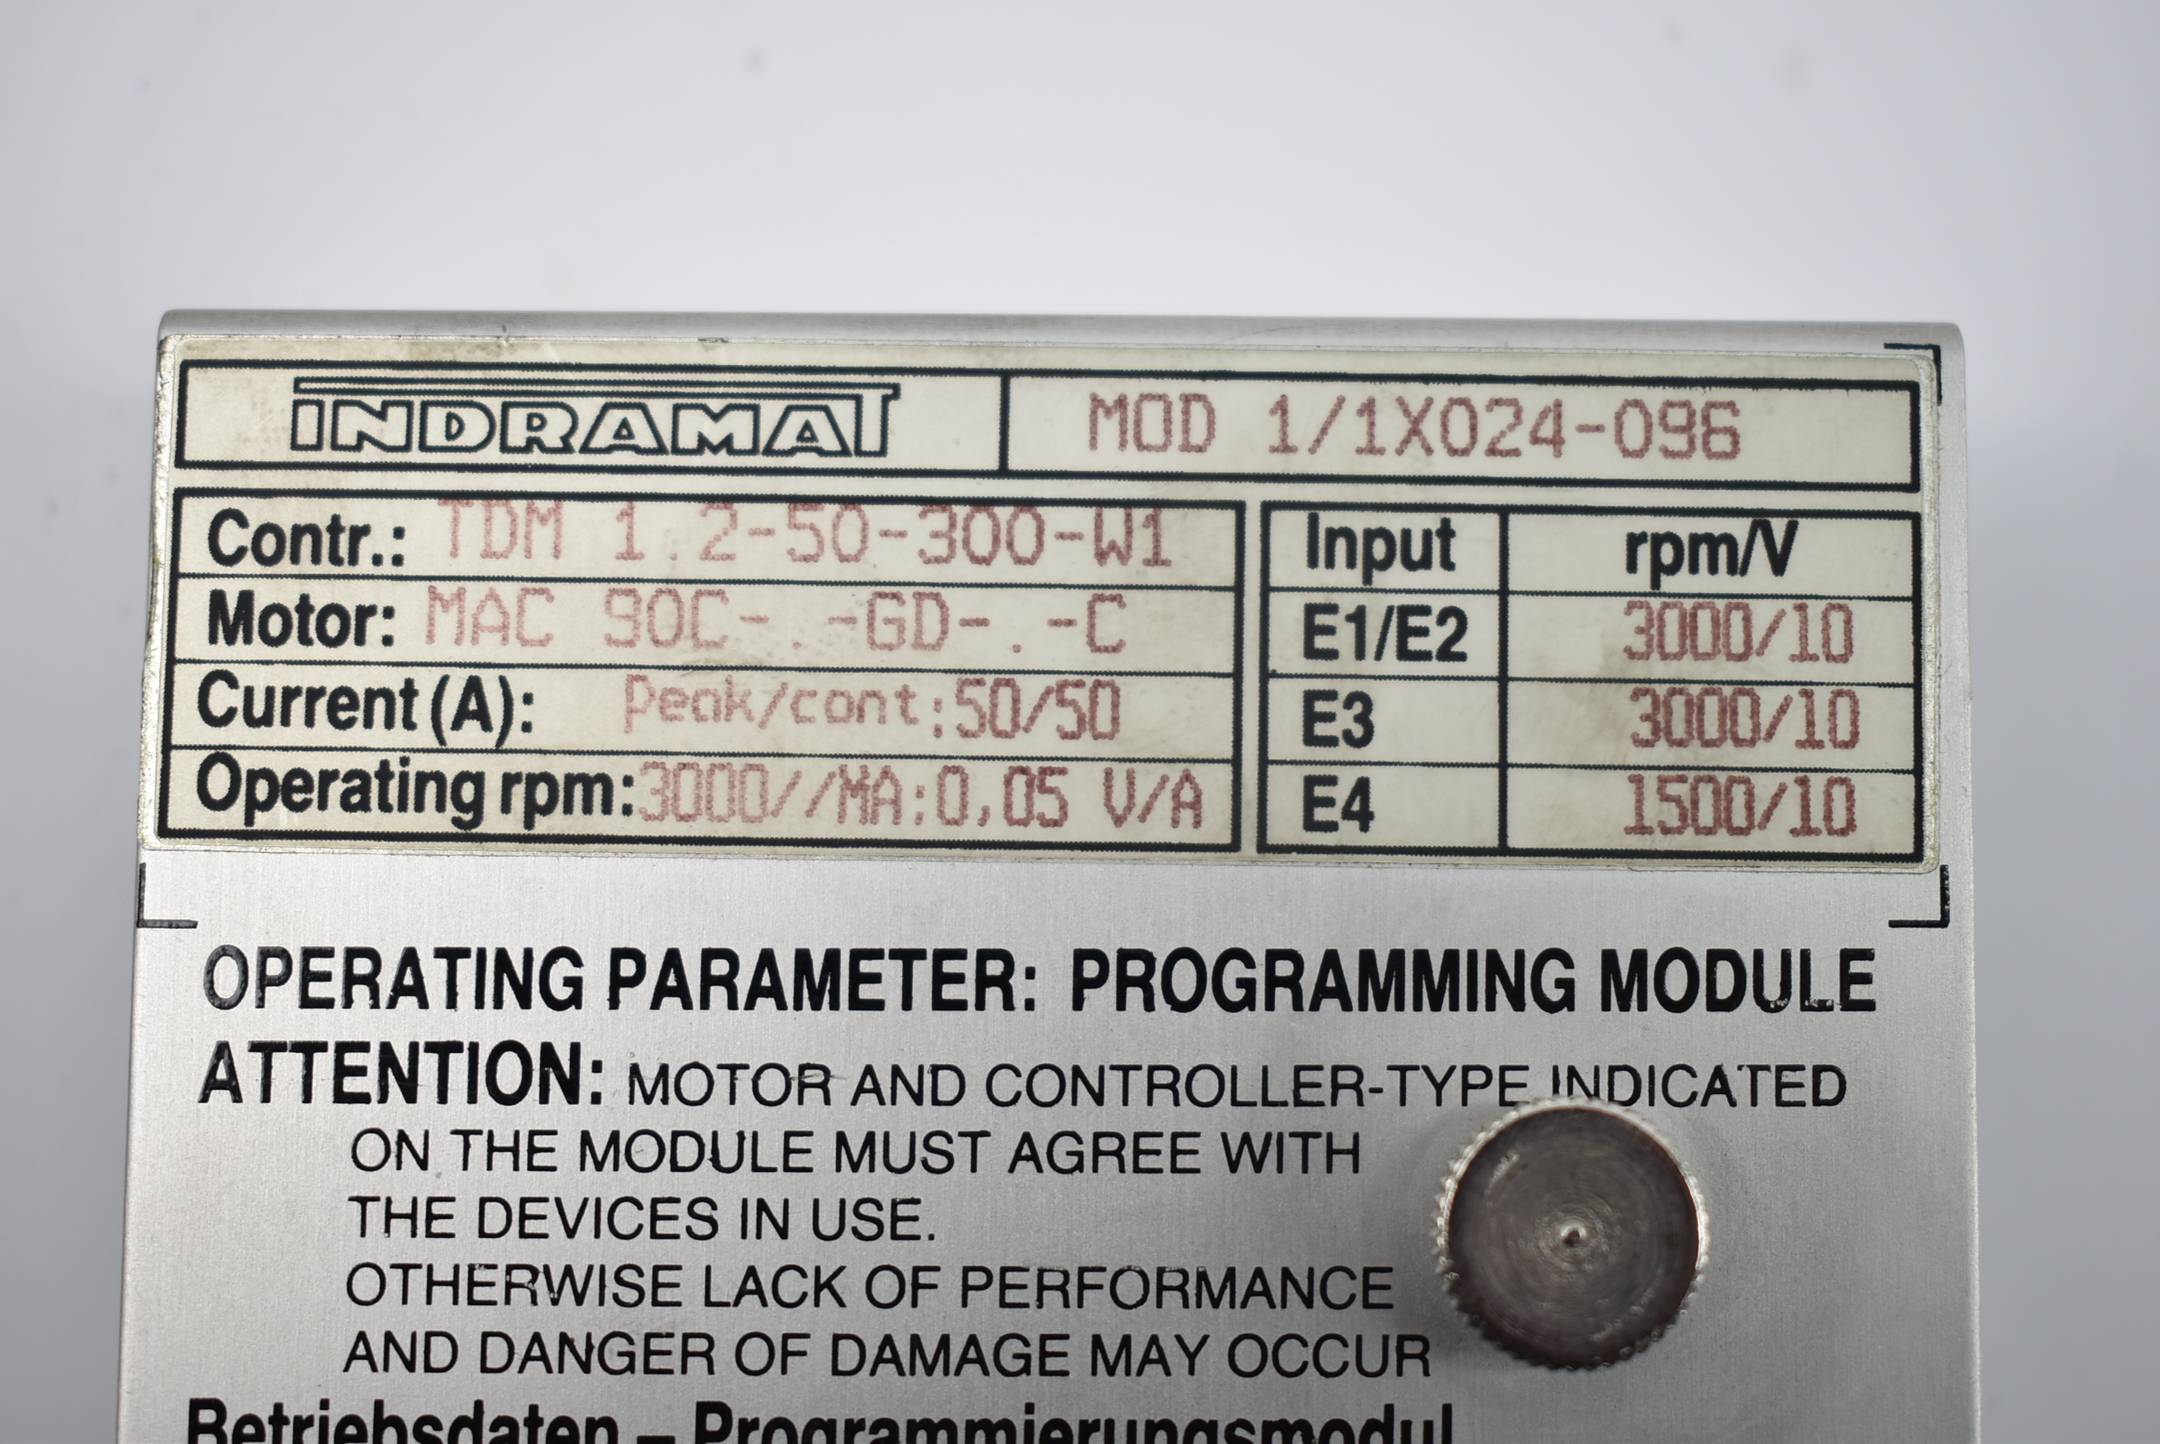 Indramat Programmierungsmodul TDM 1.2-50-300-W1 ( MOD 1/1X024-096 )